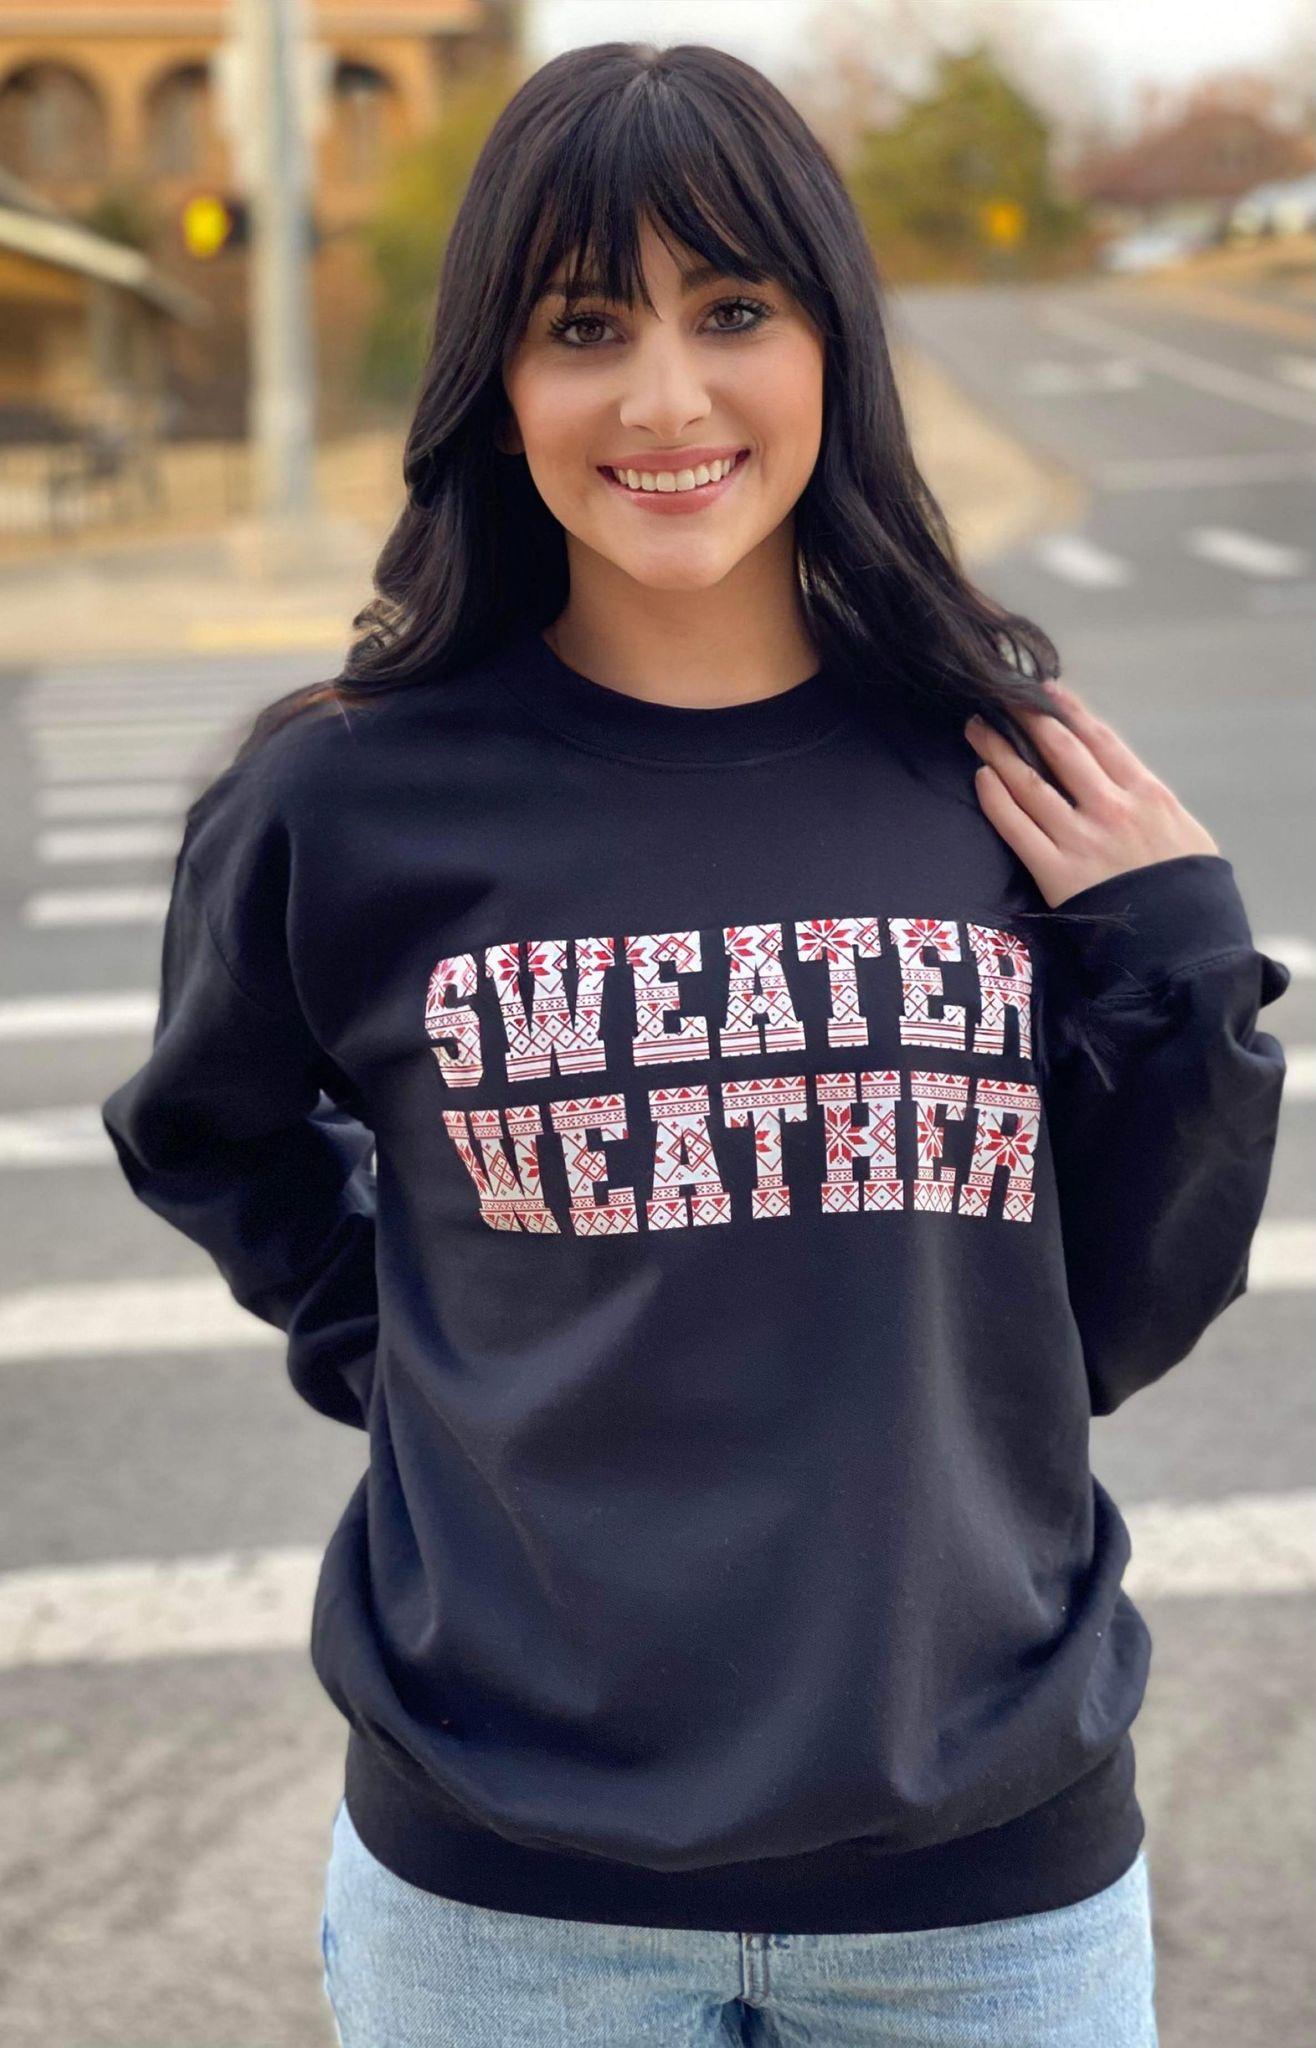 Sweater Weather - ASK Apparel LLC